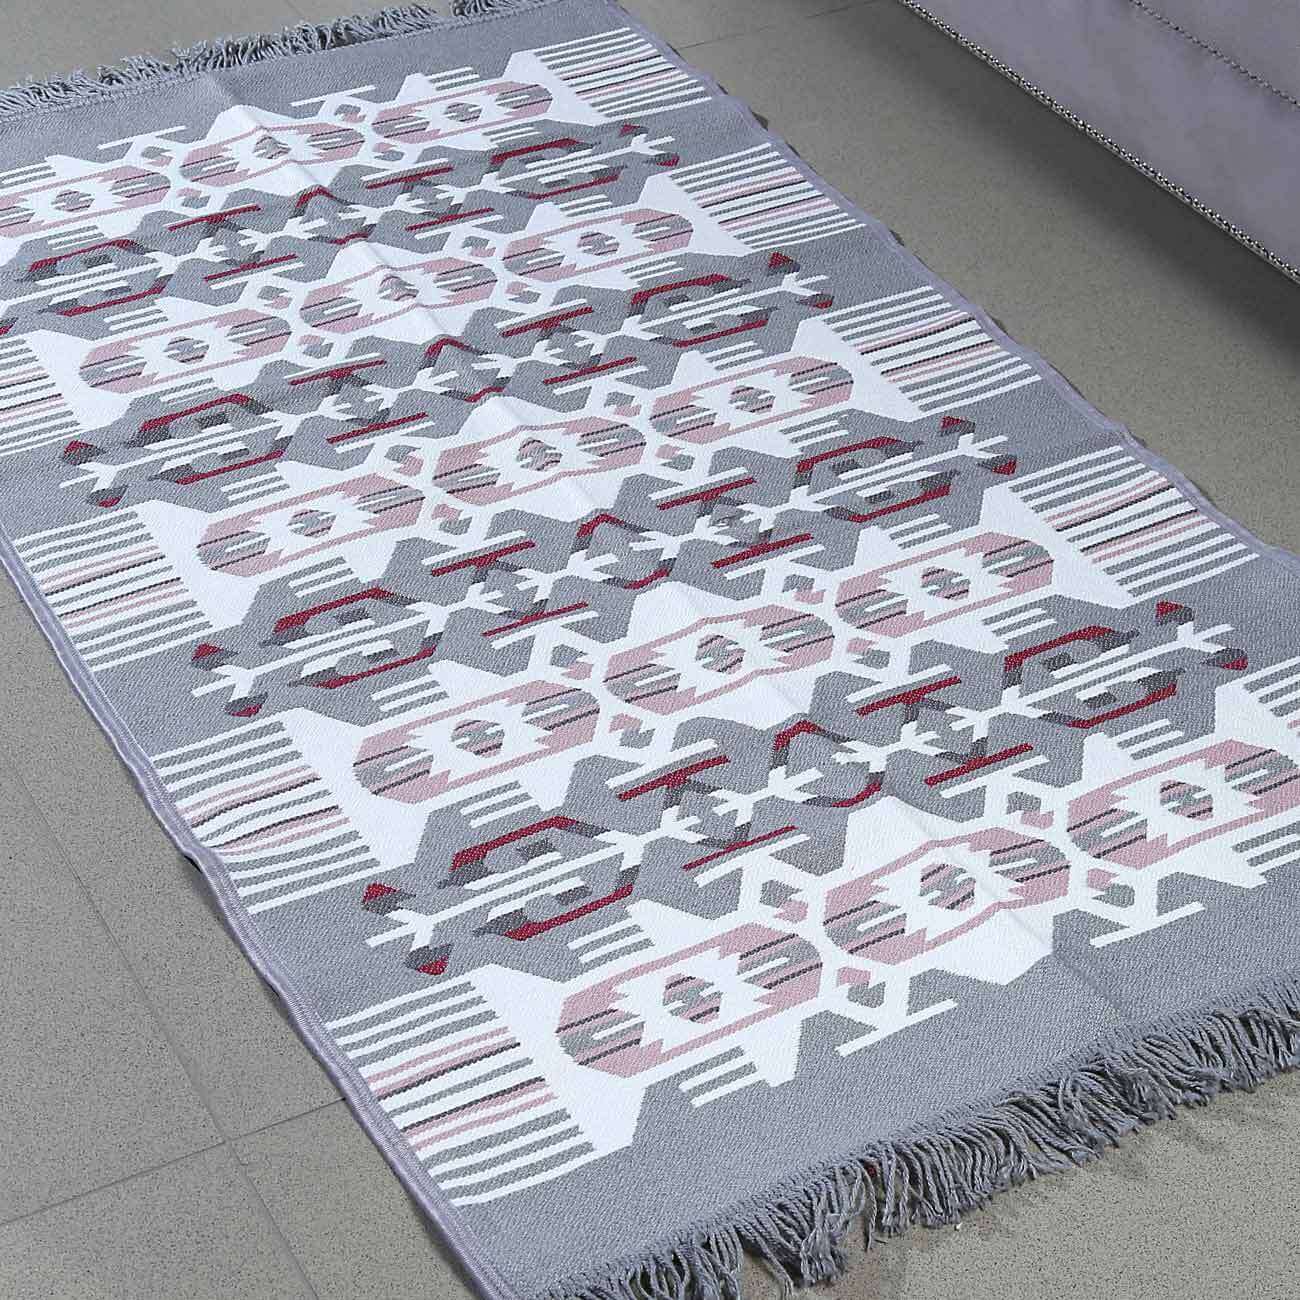 Коврик, 80х150 см, двусторонний, с бахромой, акрил, бело-серый, Узор, Carpet коврик для мыши nobrand флаг владимир